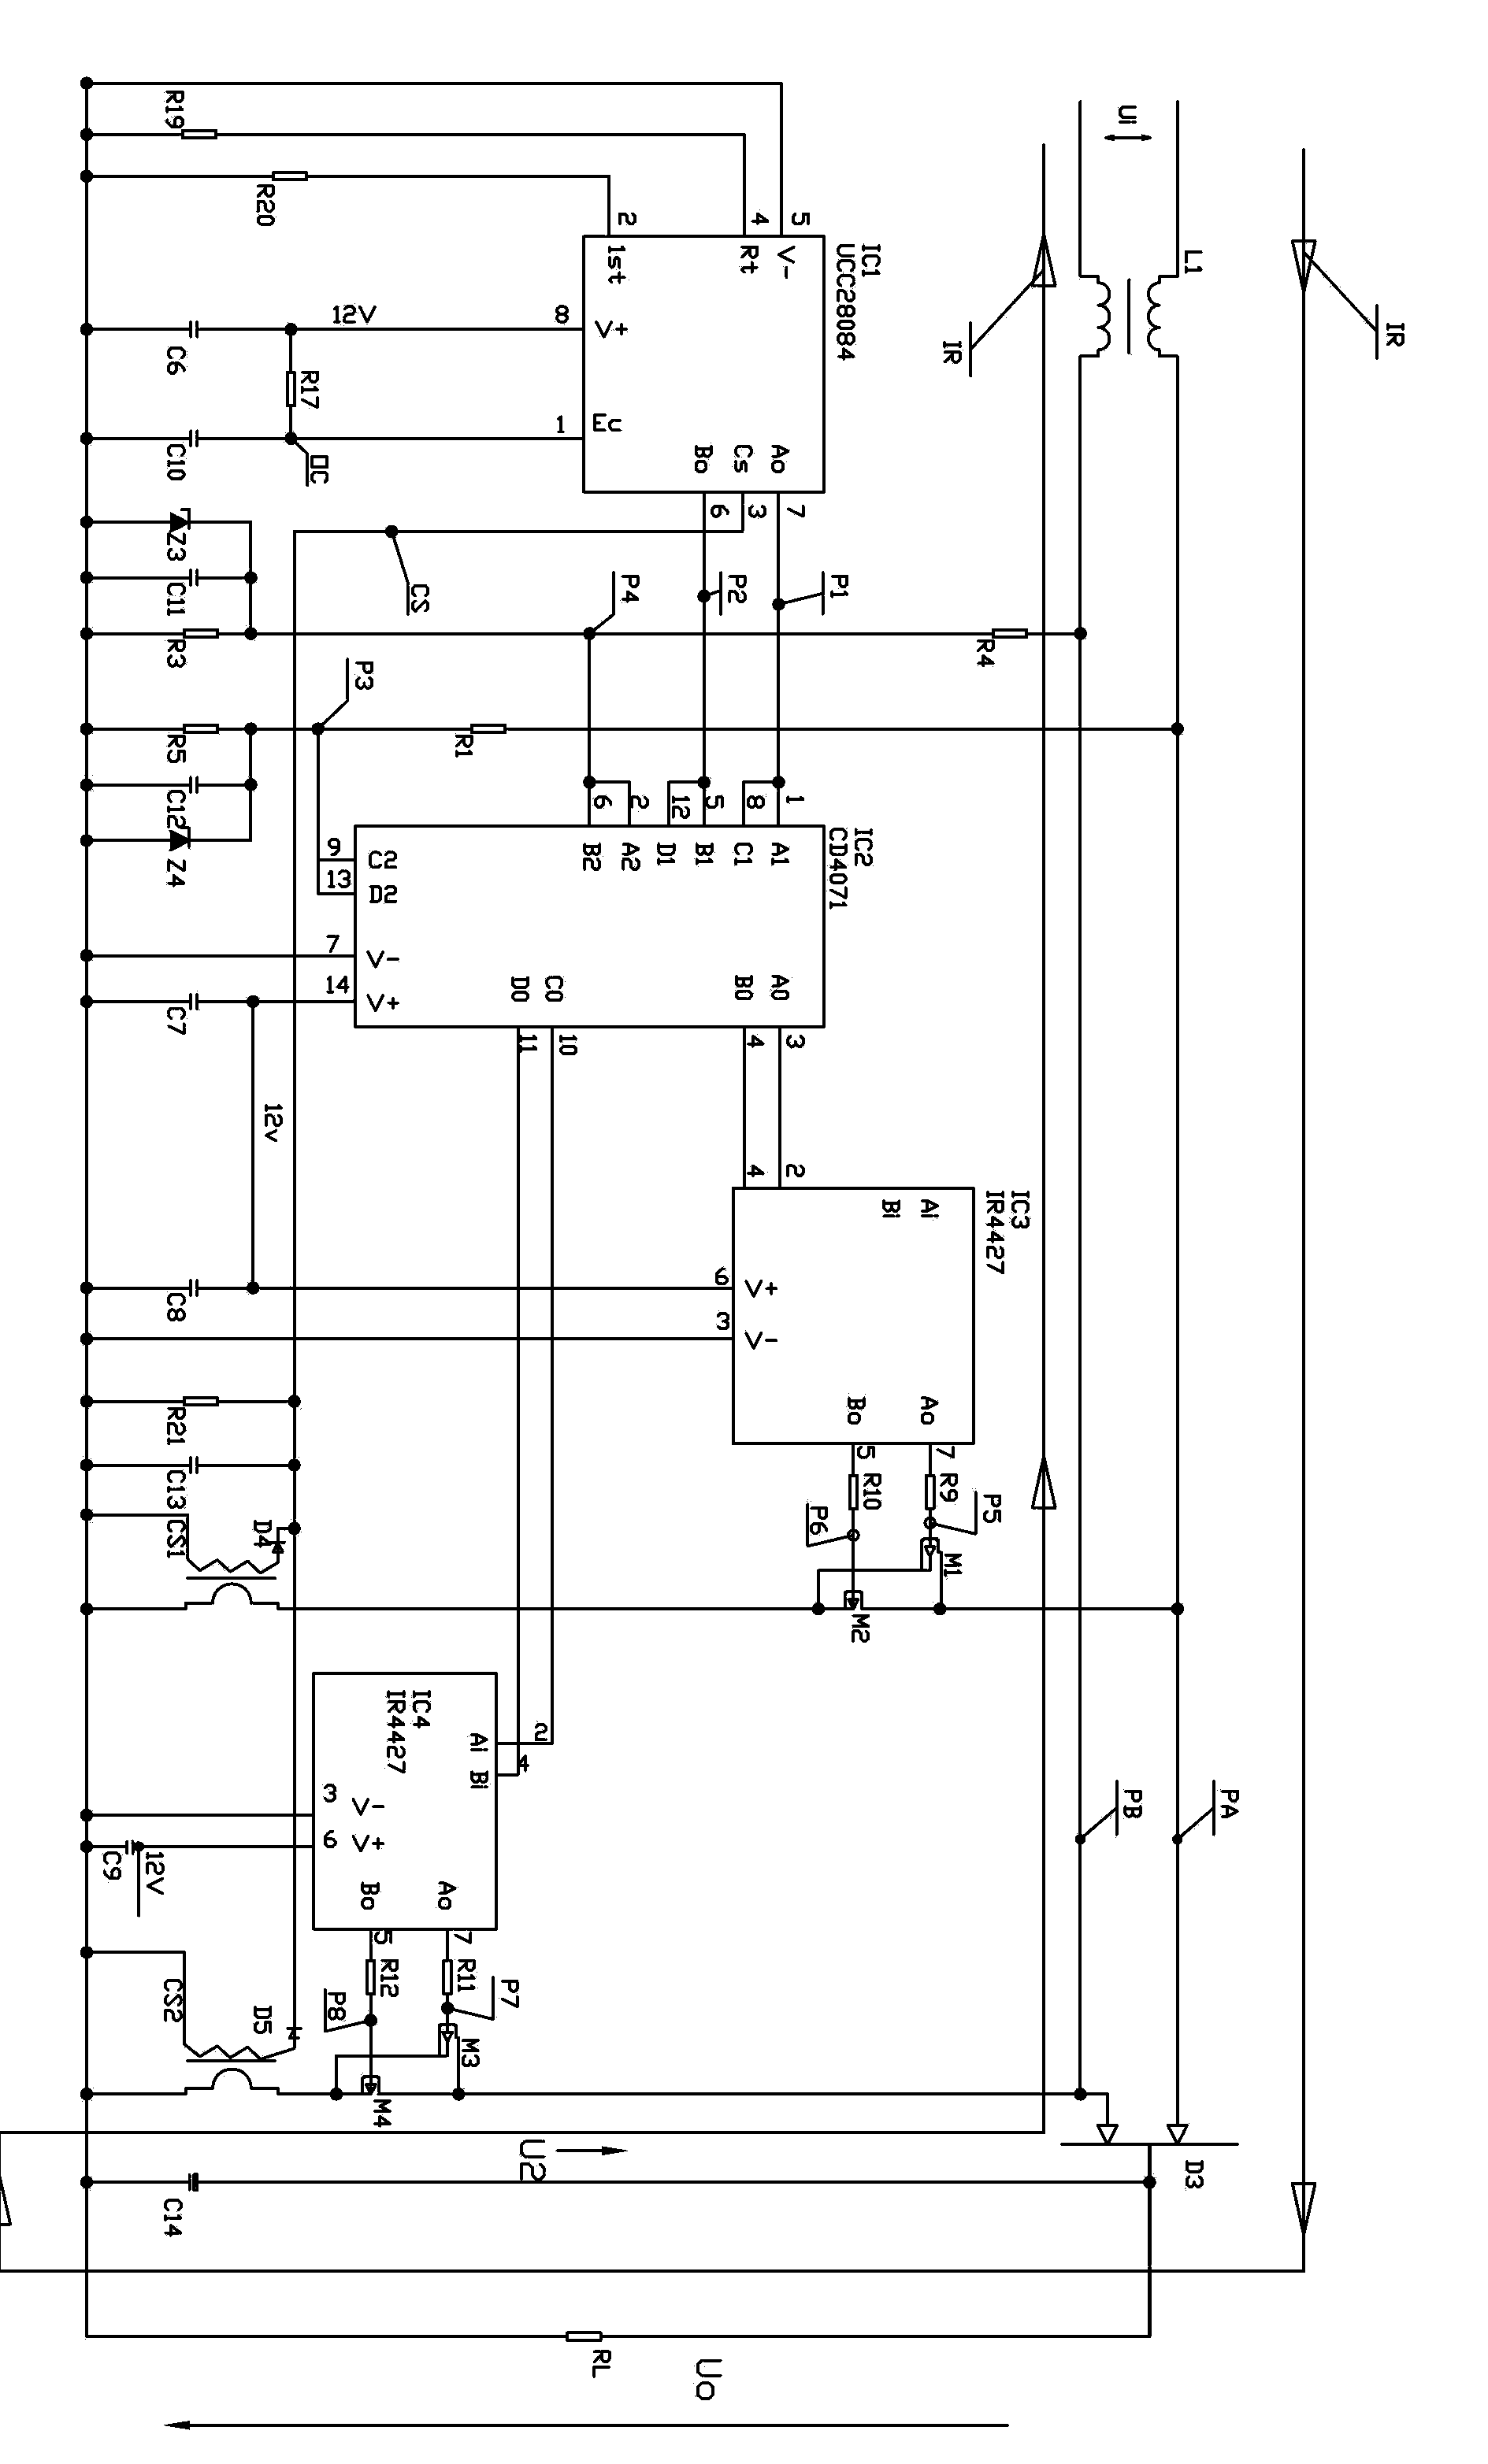 MOS transistor conduction low power consumption anti-jamming circuit